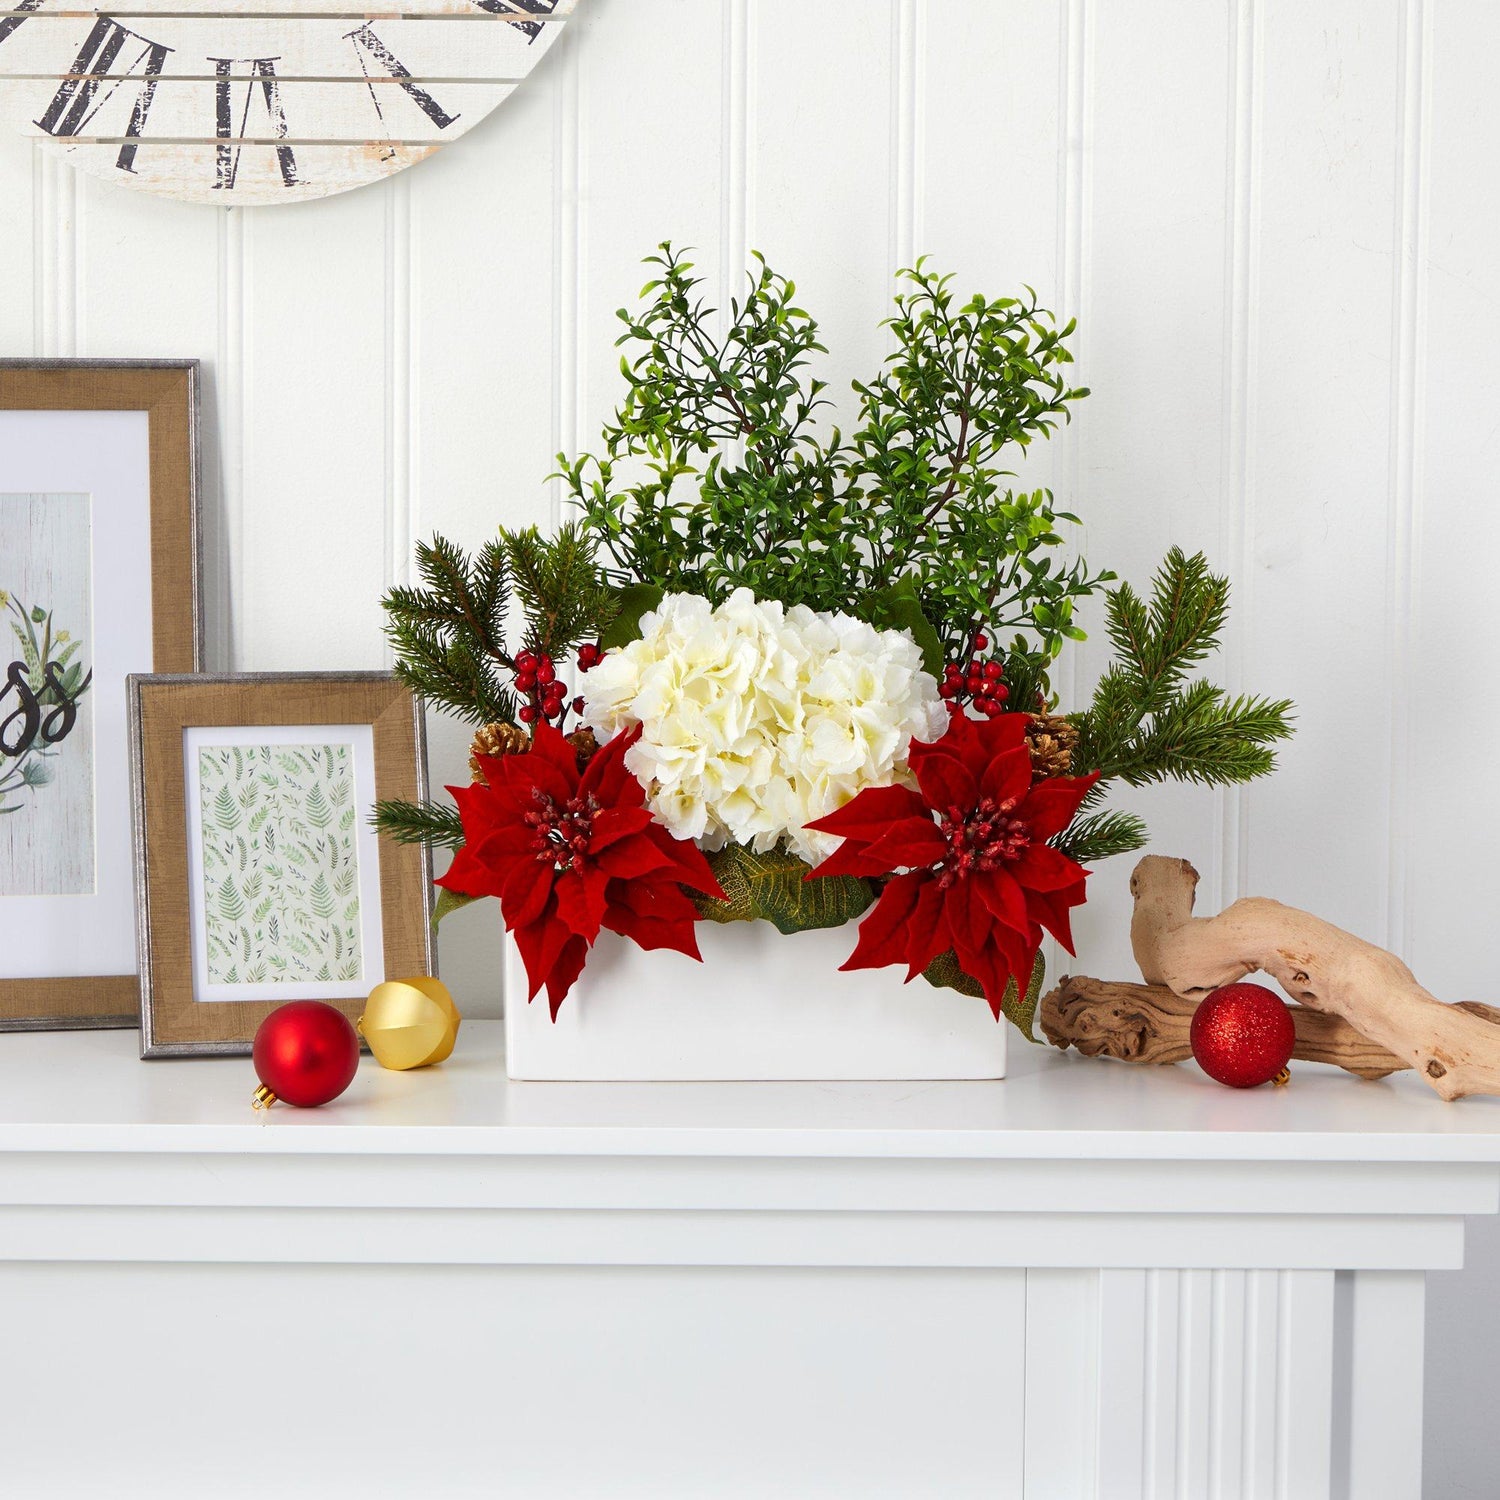 22” Poinsettia, Hydrangea and Boxwood Artificial Arrangement in White Vase